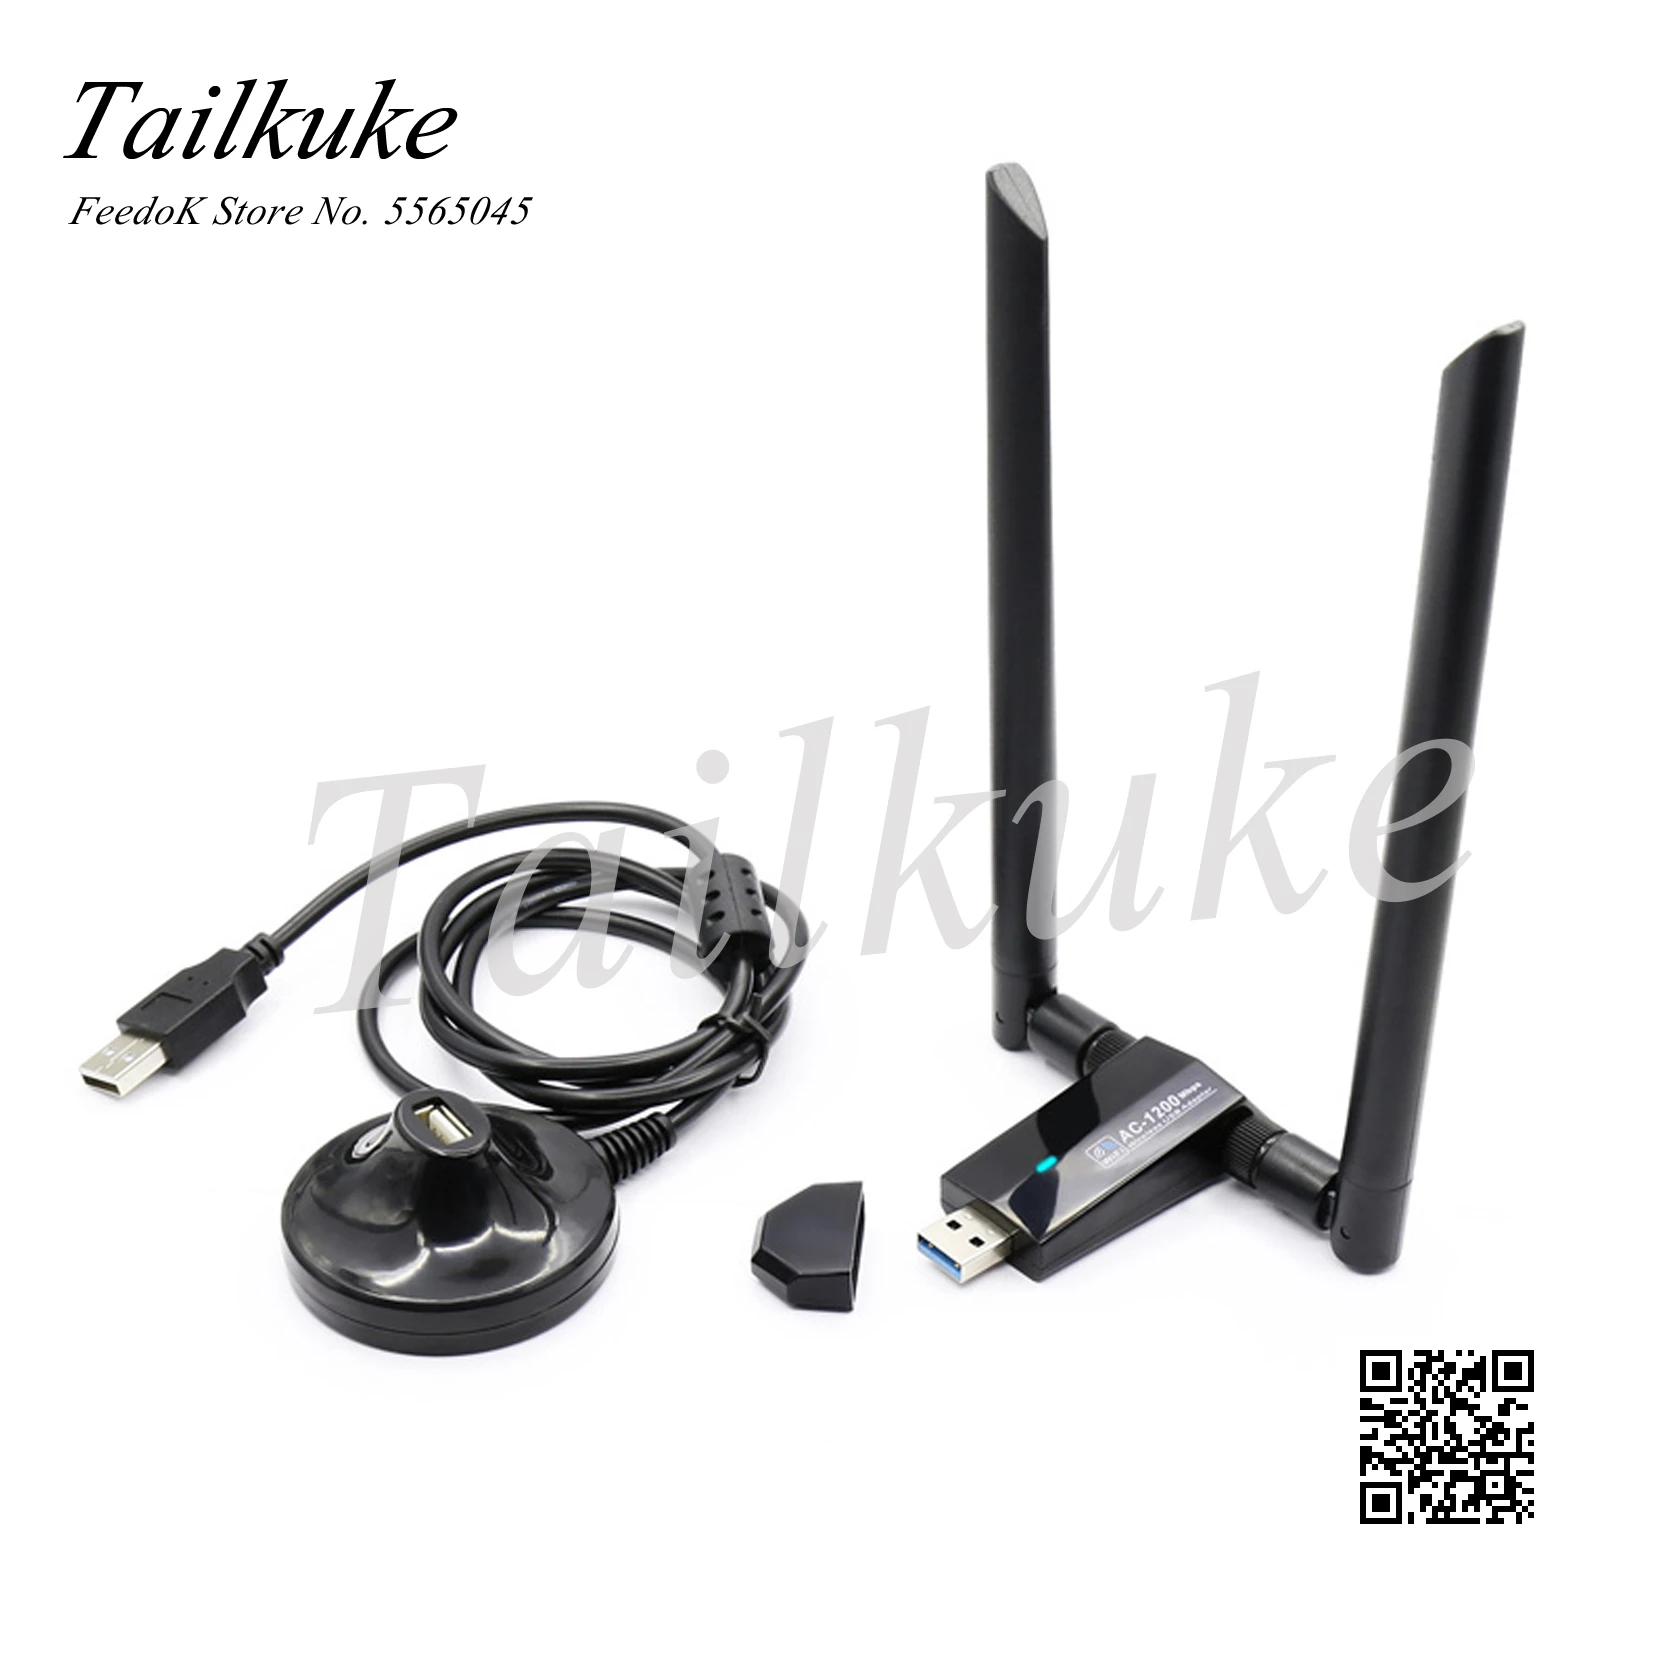 Rtl8812au Kali Linux Network Card Penetration Test Usb Wireless Wifi  Transmitter Receiver Ap Gigabit - Air Conditioner Parts - AliExpress